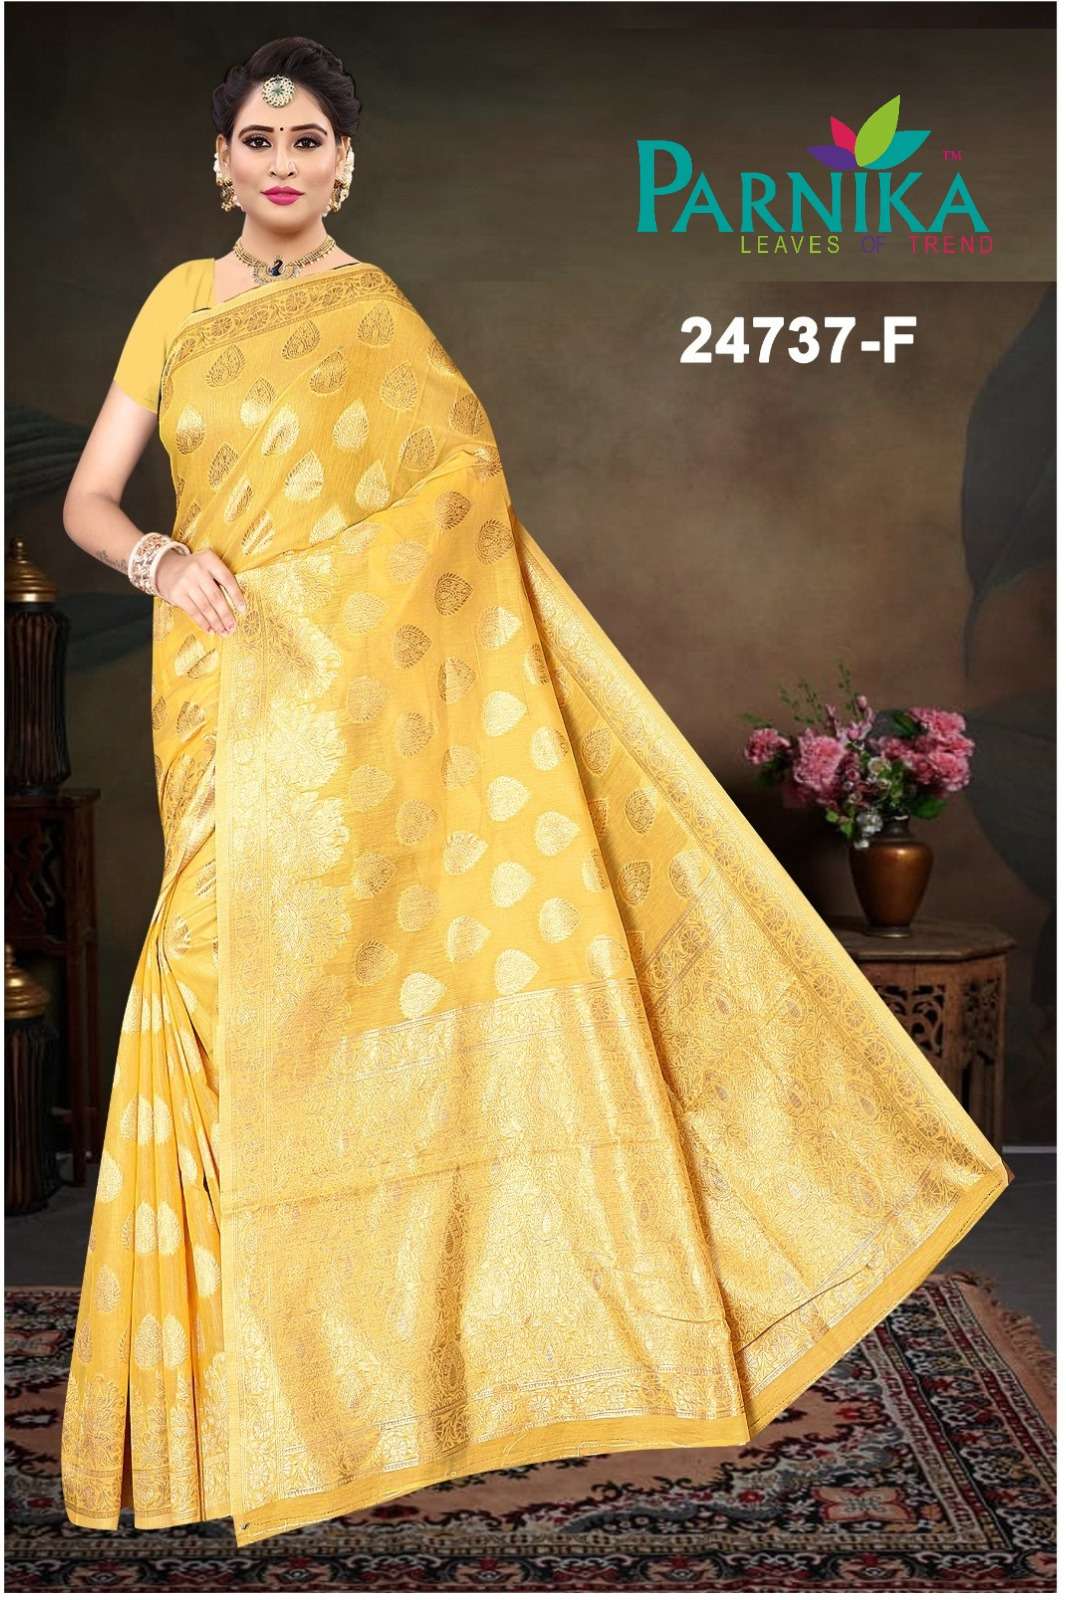 Parnika India Cotton Spun Sarees Festive Wear Wedding Ready to Wear Saree in Wholesale rate - 24737